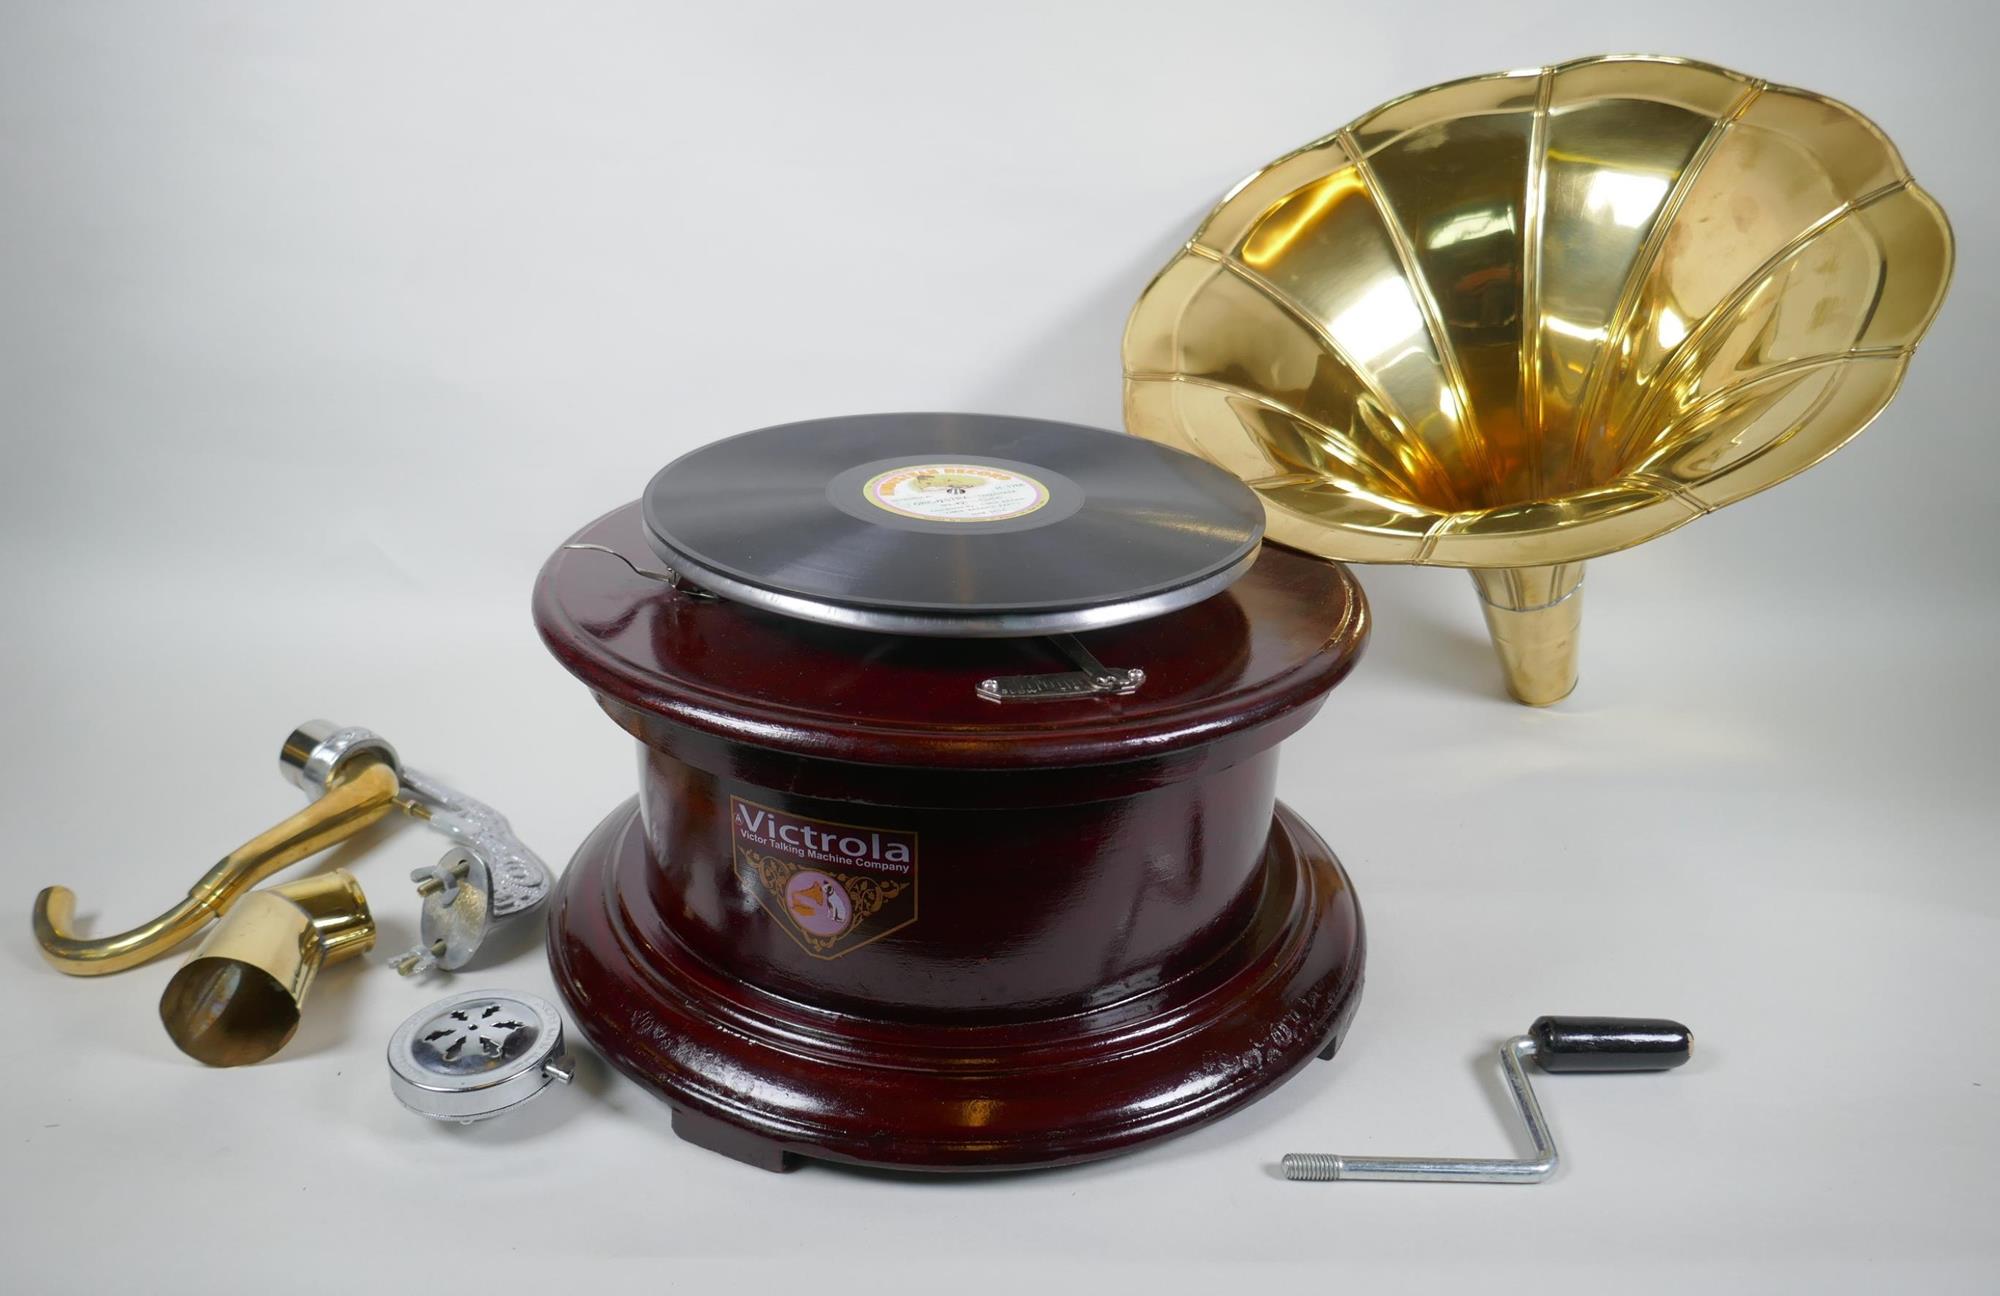 A vintage style Victrola gramophone, 37cm diameter - Image 2 of 3